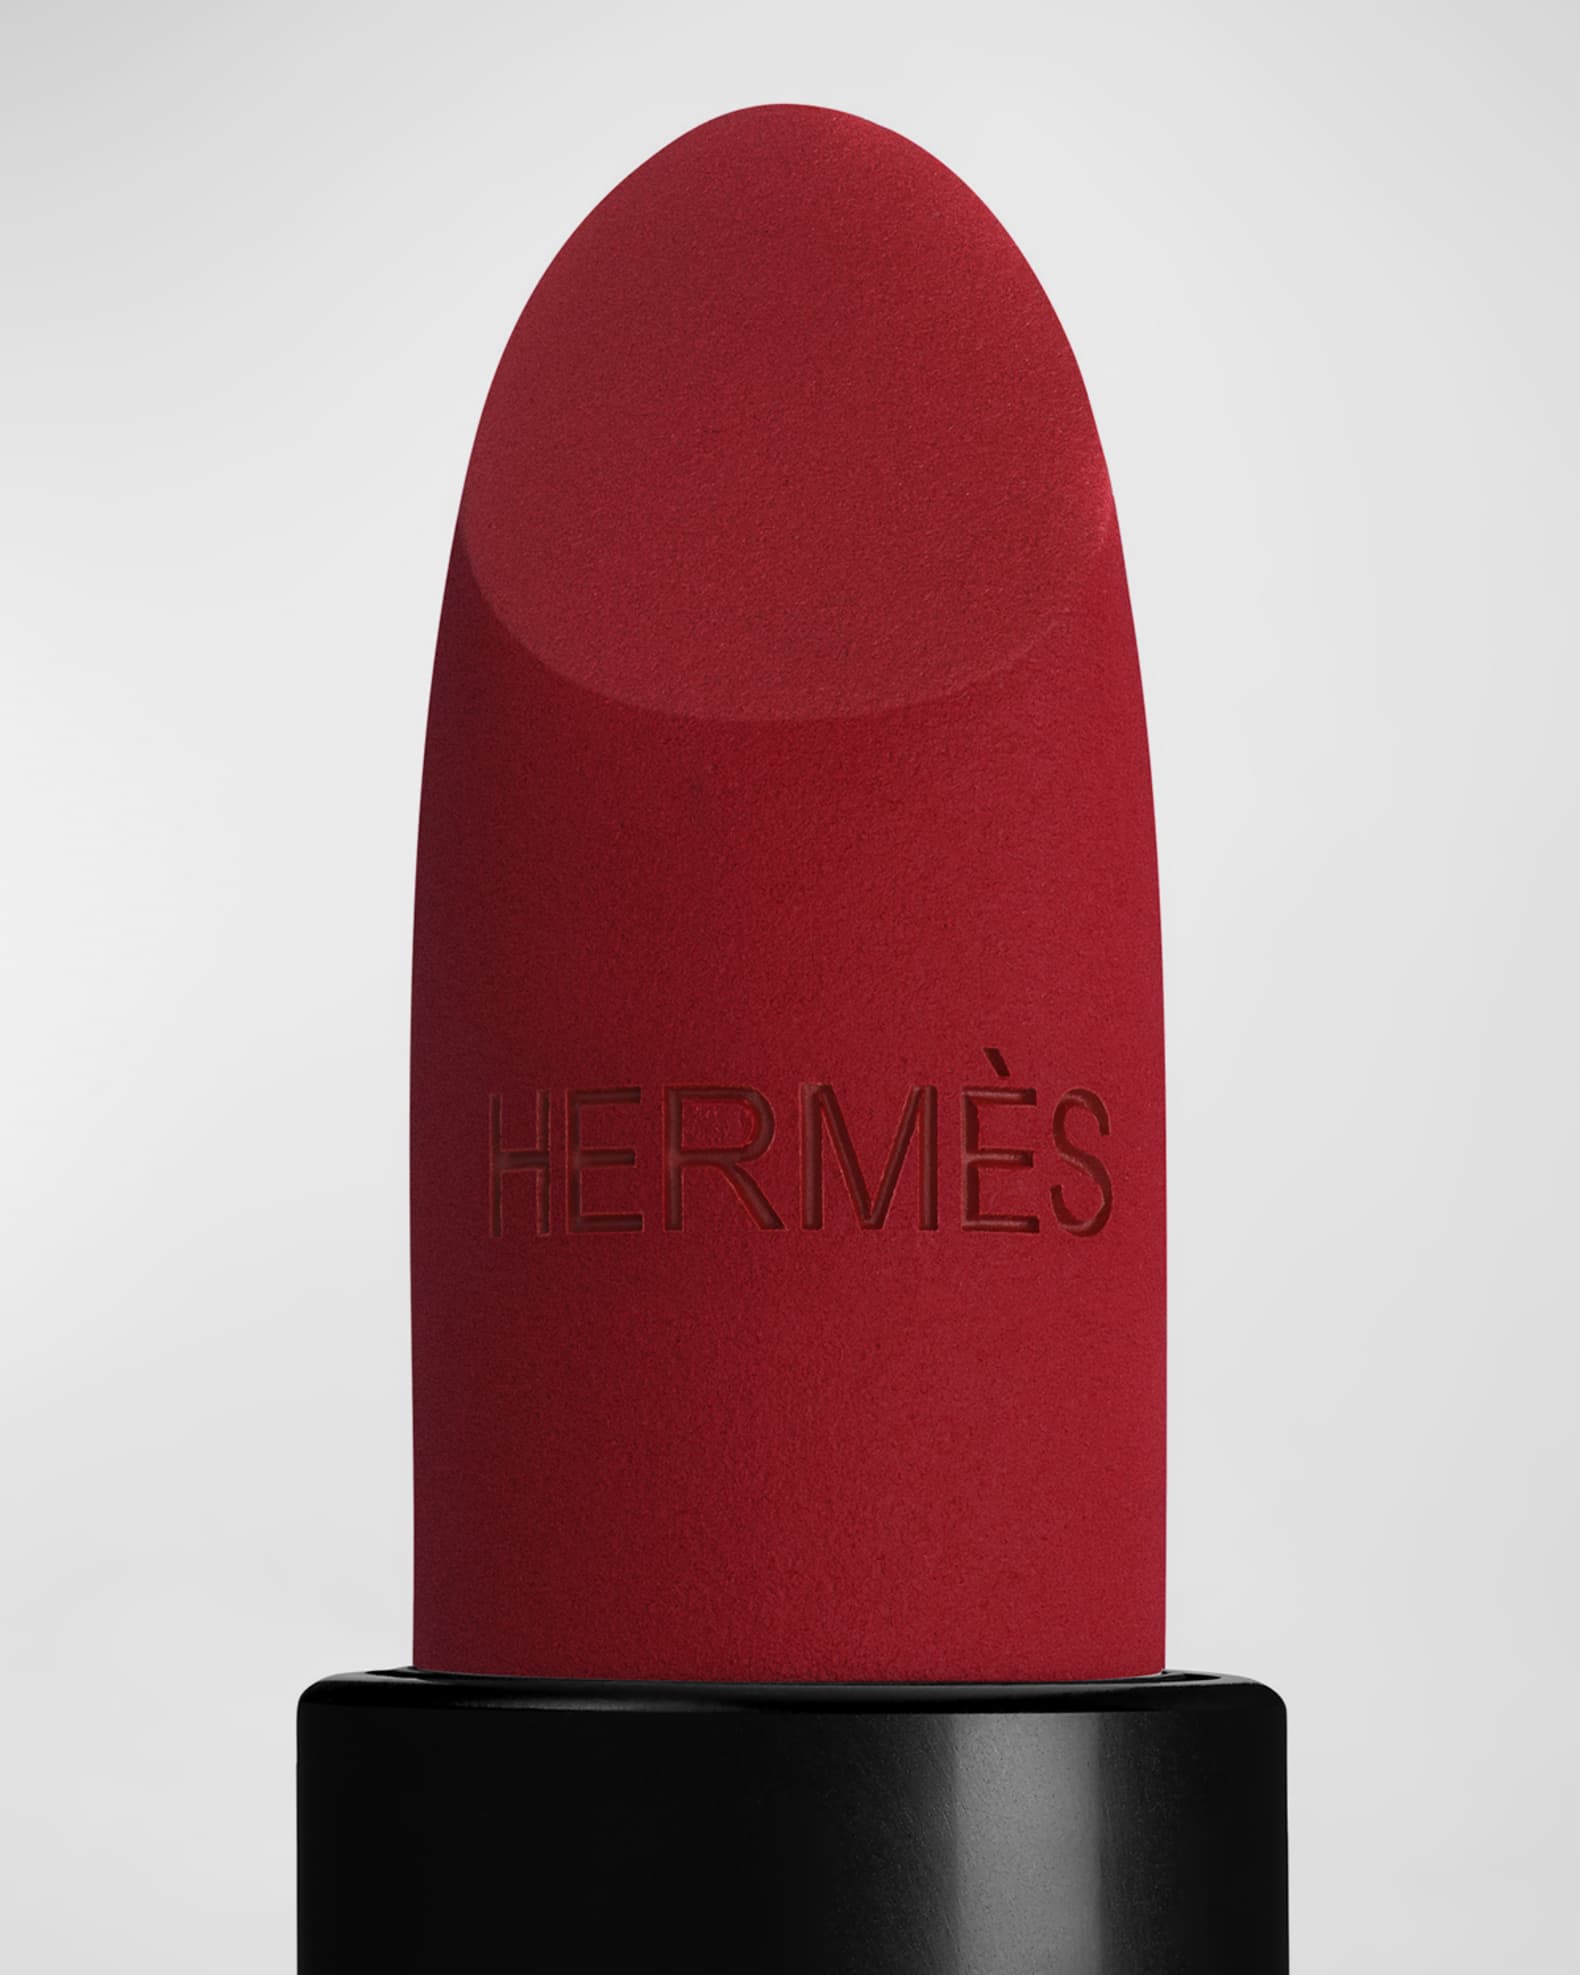 Hermes Rouge Hermes Matte Lipstick